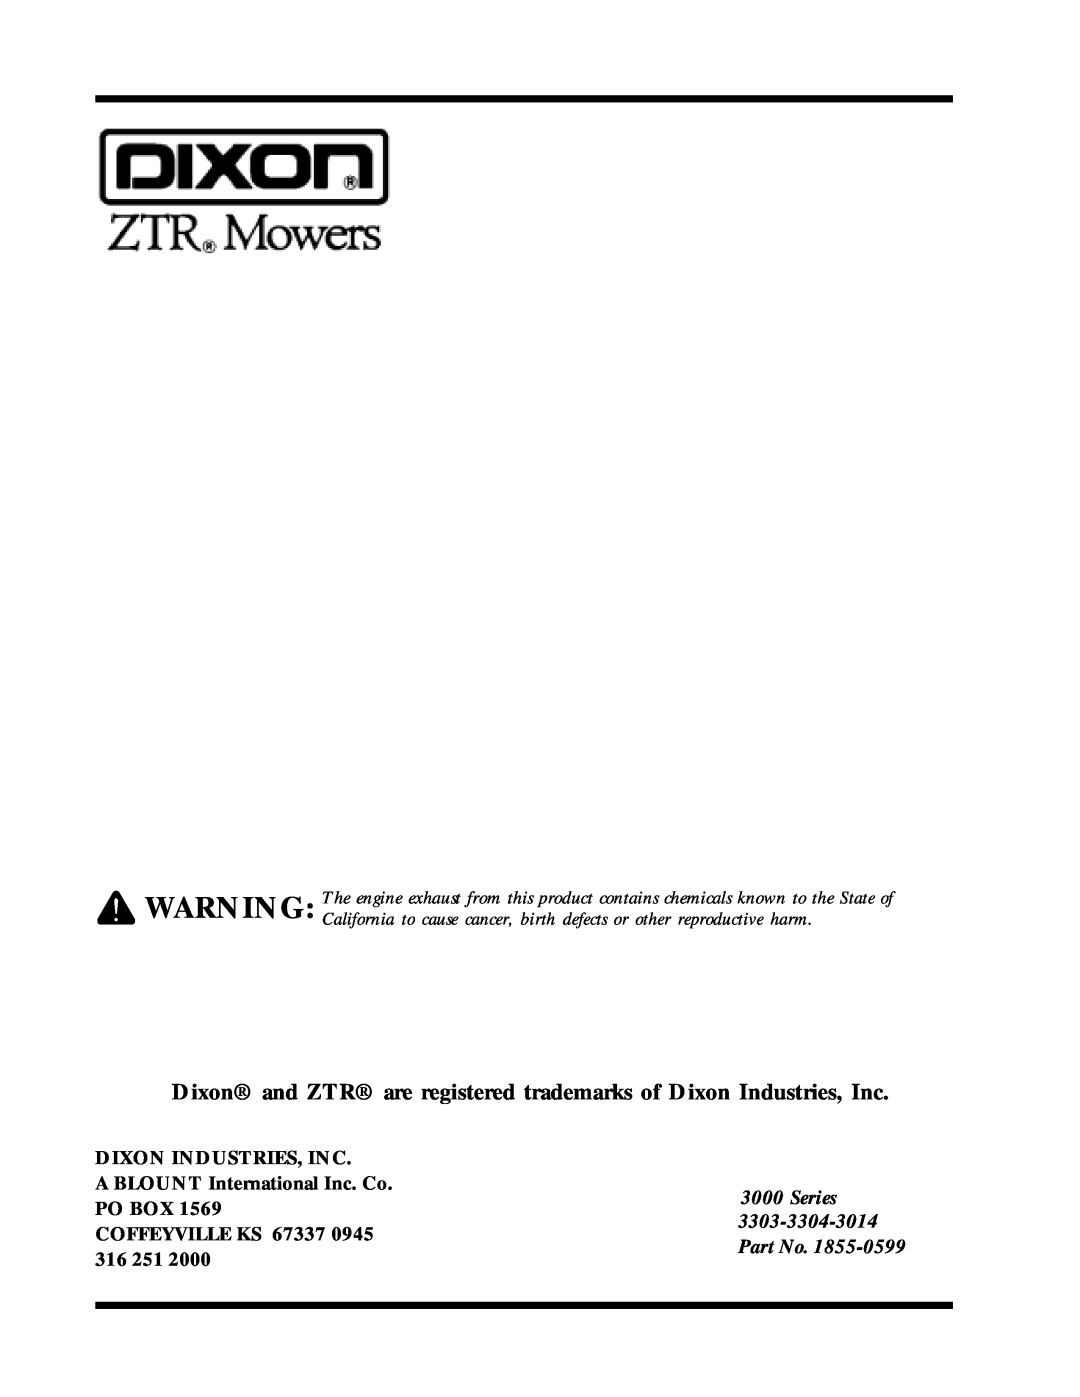 Dixon ZTR 2301 manual Dixon and ZTR are registered trademarks of Dixon Industries, Inc, Series 3303-3304-3014 Part No 